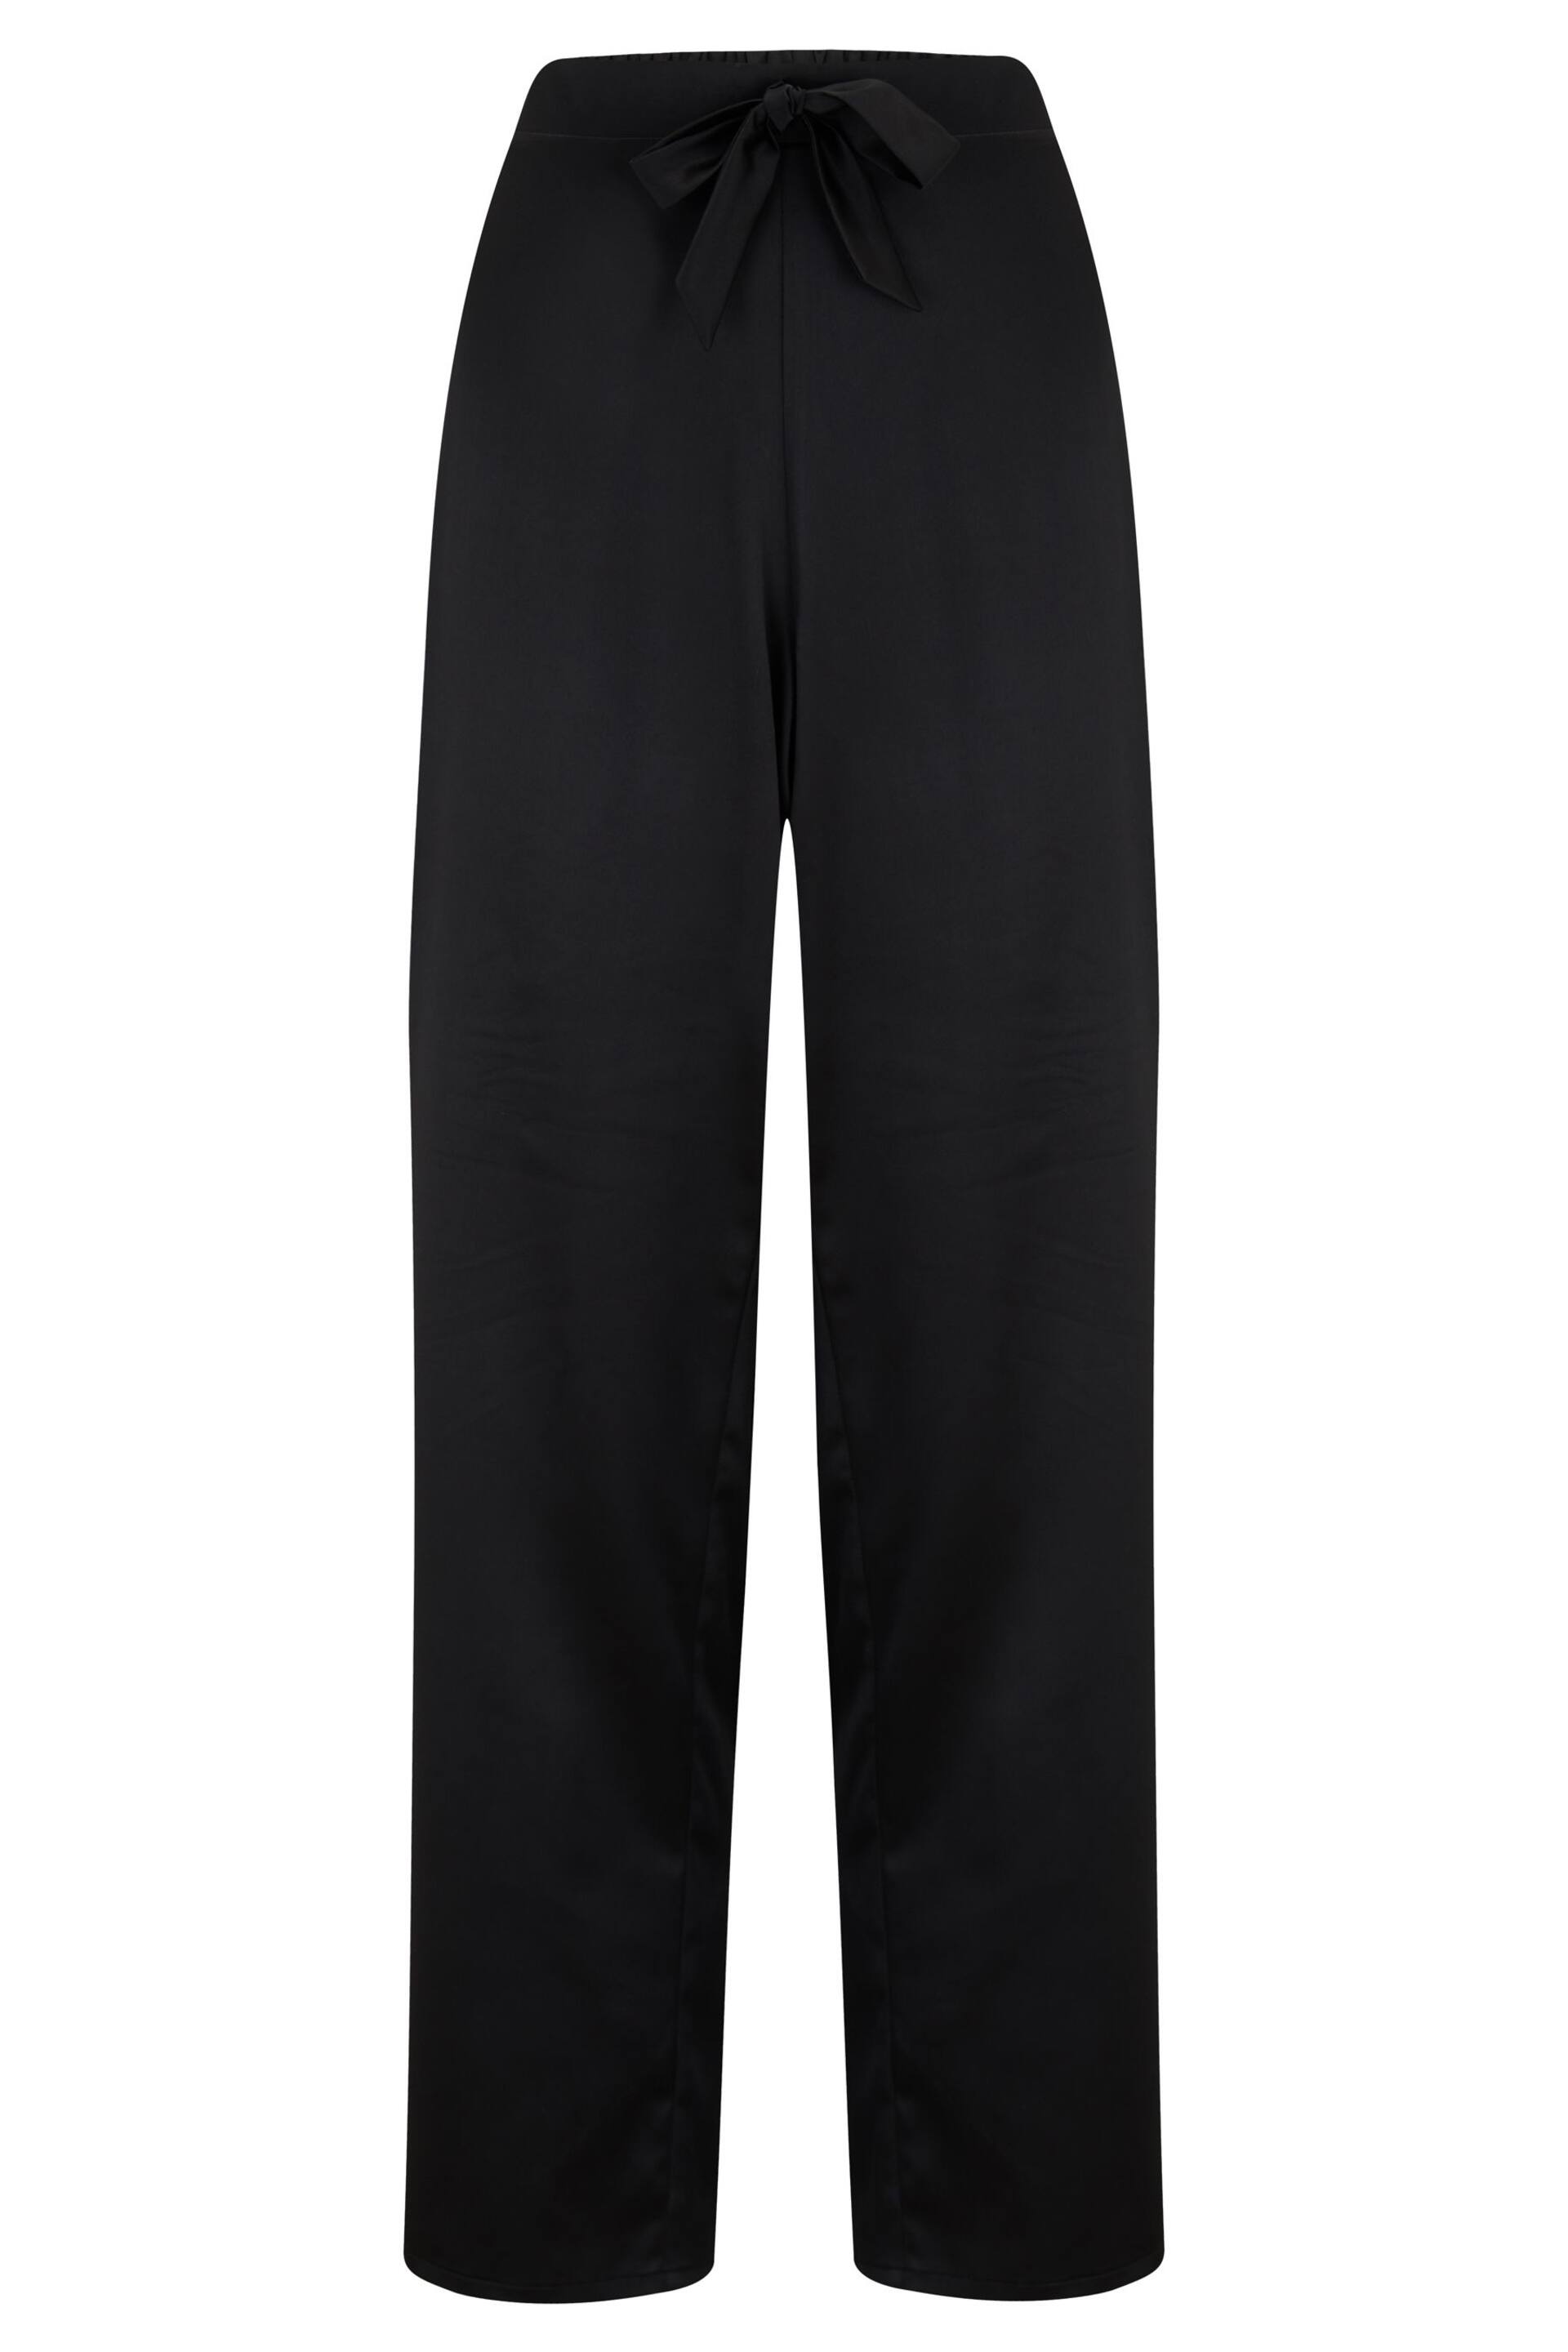 Pour Moi Black Jersey And Satin Pyjamas - Image 5 of 5